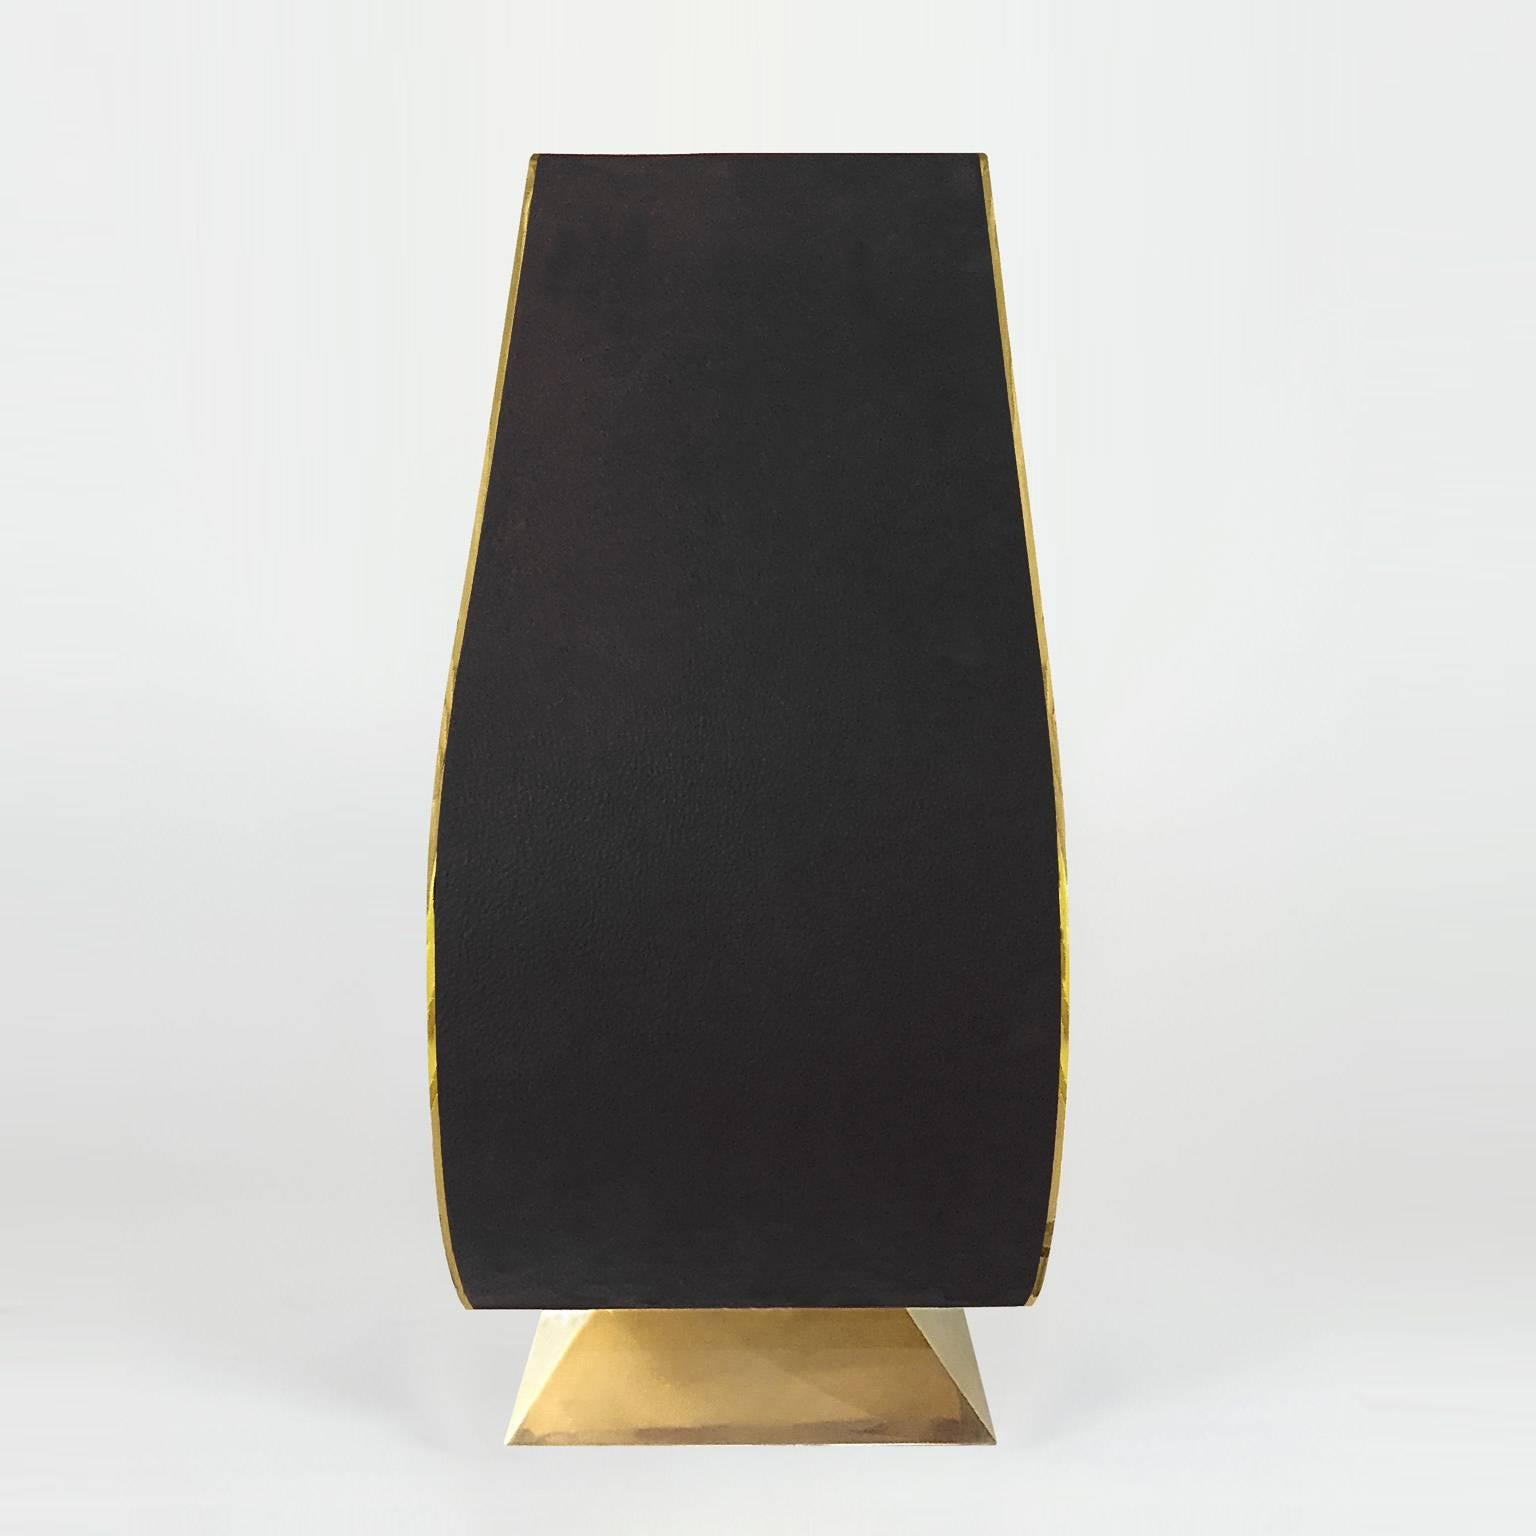 Art Deco Table Lamp 'Kappasigma' N°1/20 by Antoine Vignault, OAK Limited Edition For Sale